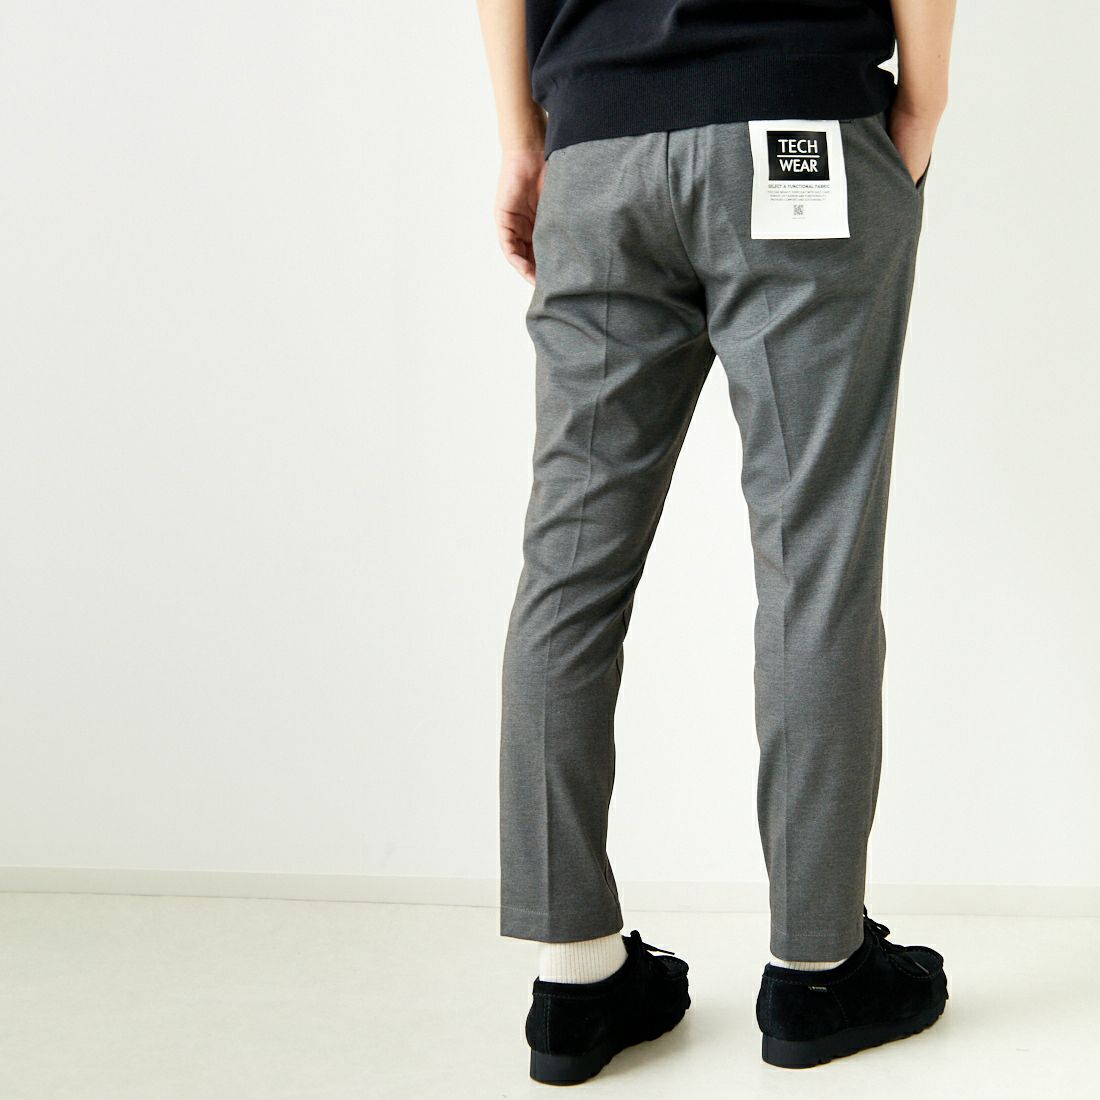 Jeans Factory Clothes [ジーンズファクトリークローズ] テックポンチ 1Pイージースラックス [JFC-242-017] 2 GRYﾒﾗﾝｼﾞ &&モデル身長：179cm 着用サイズ：M&&